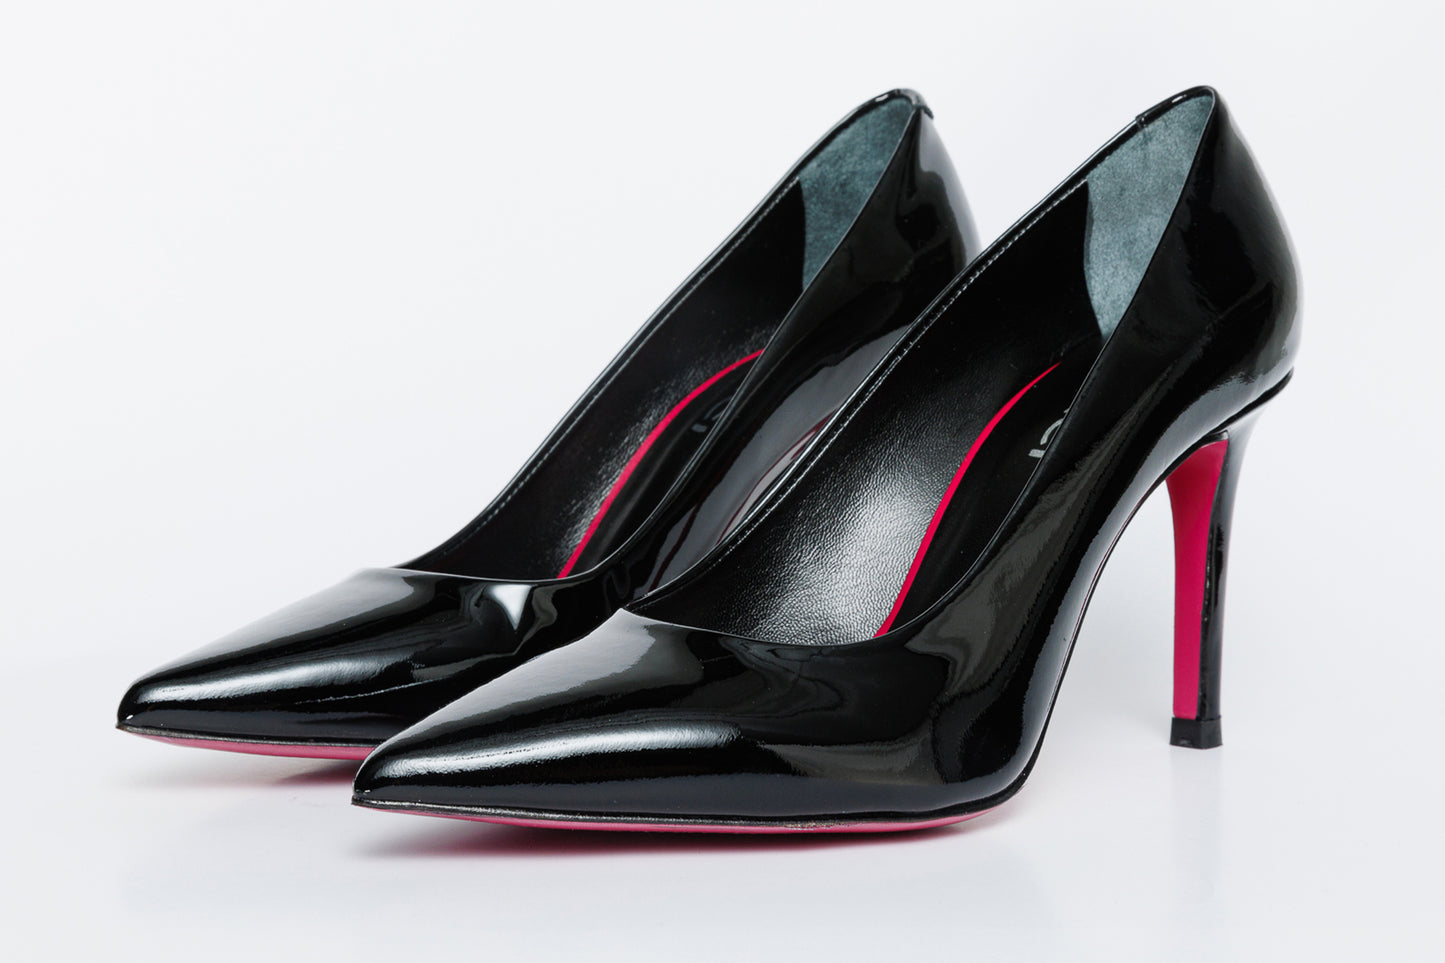 The Ege Black Patent Leather Pump Fuchsia Sole Women Shoe